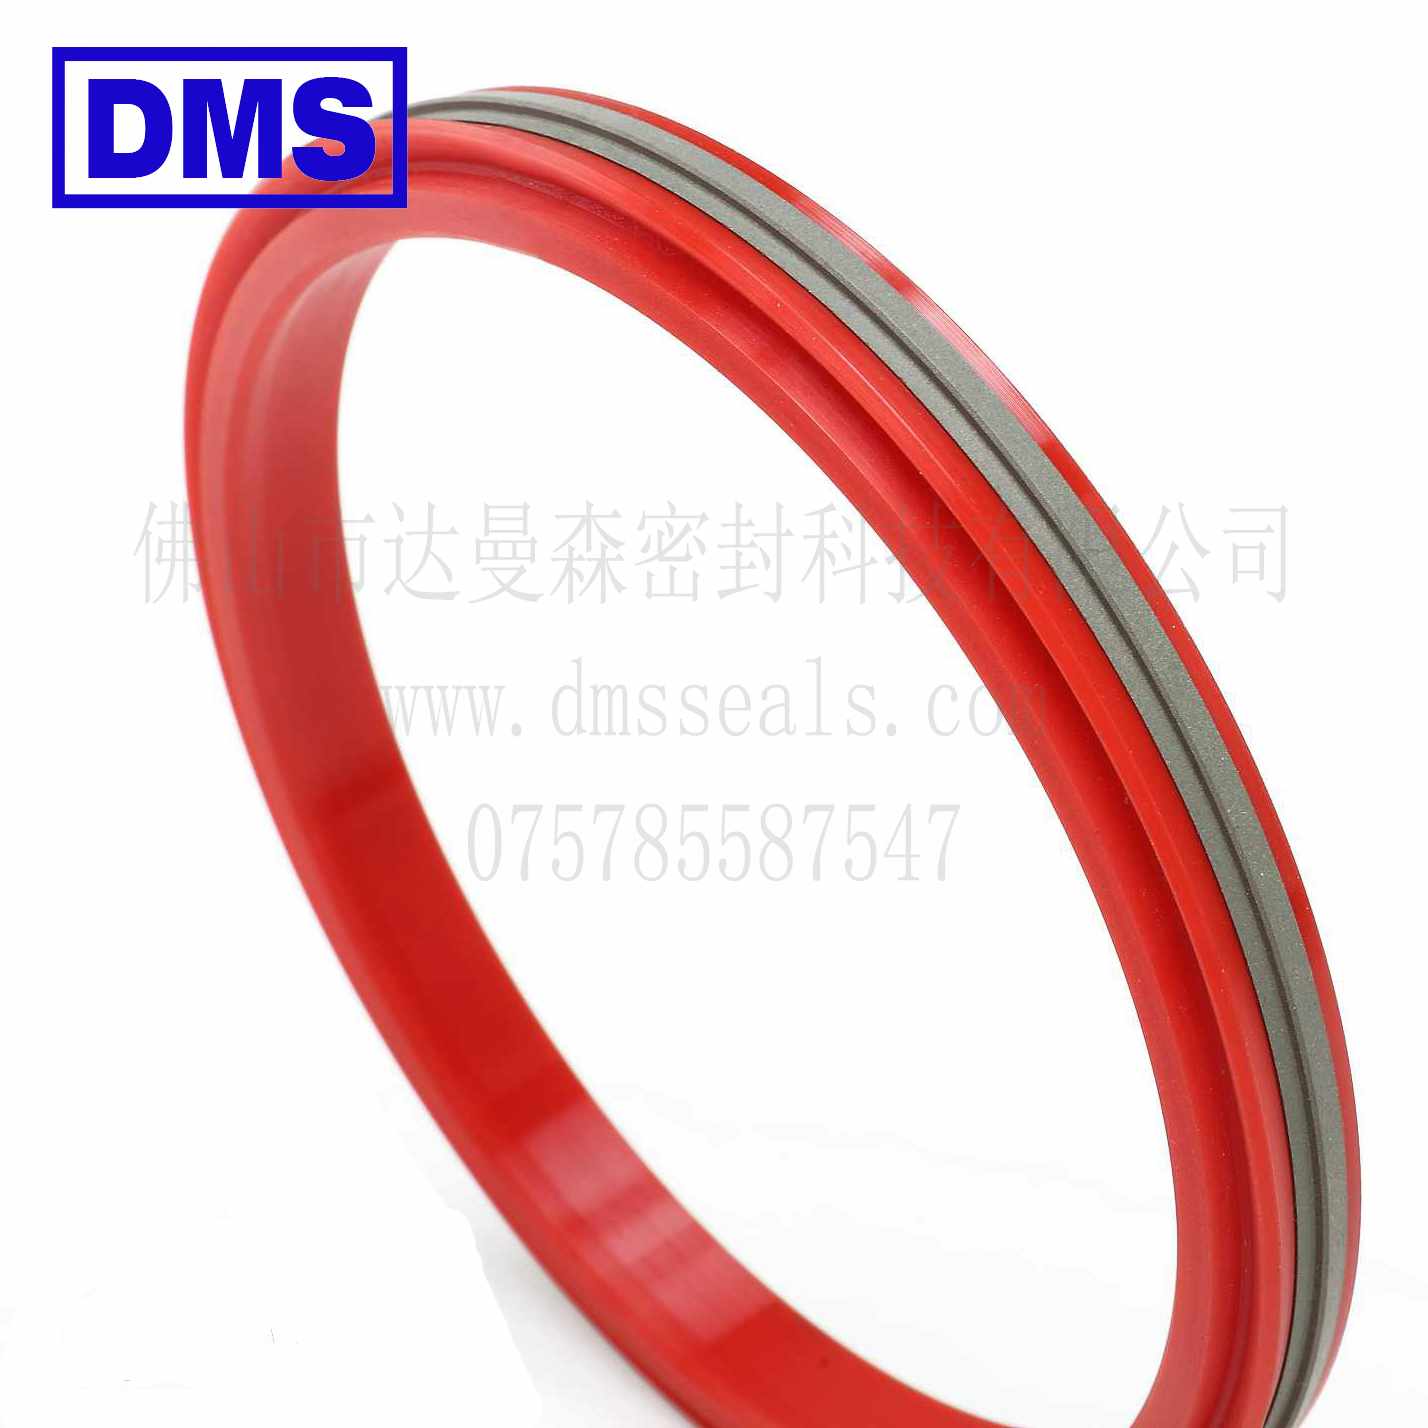 DMS Seal Manufacturer-DDA - PTFE Hydraulic Piston Seal with NBRFKM O-Ring